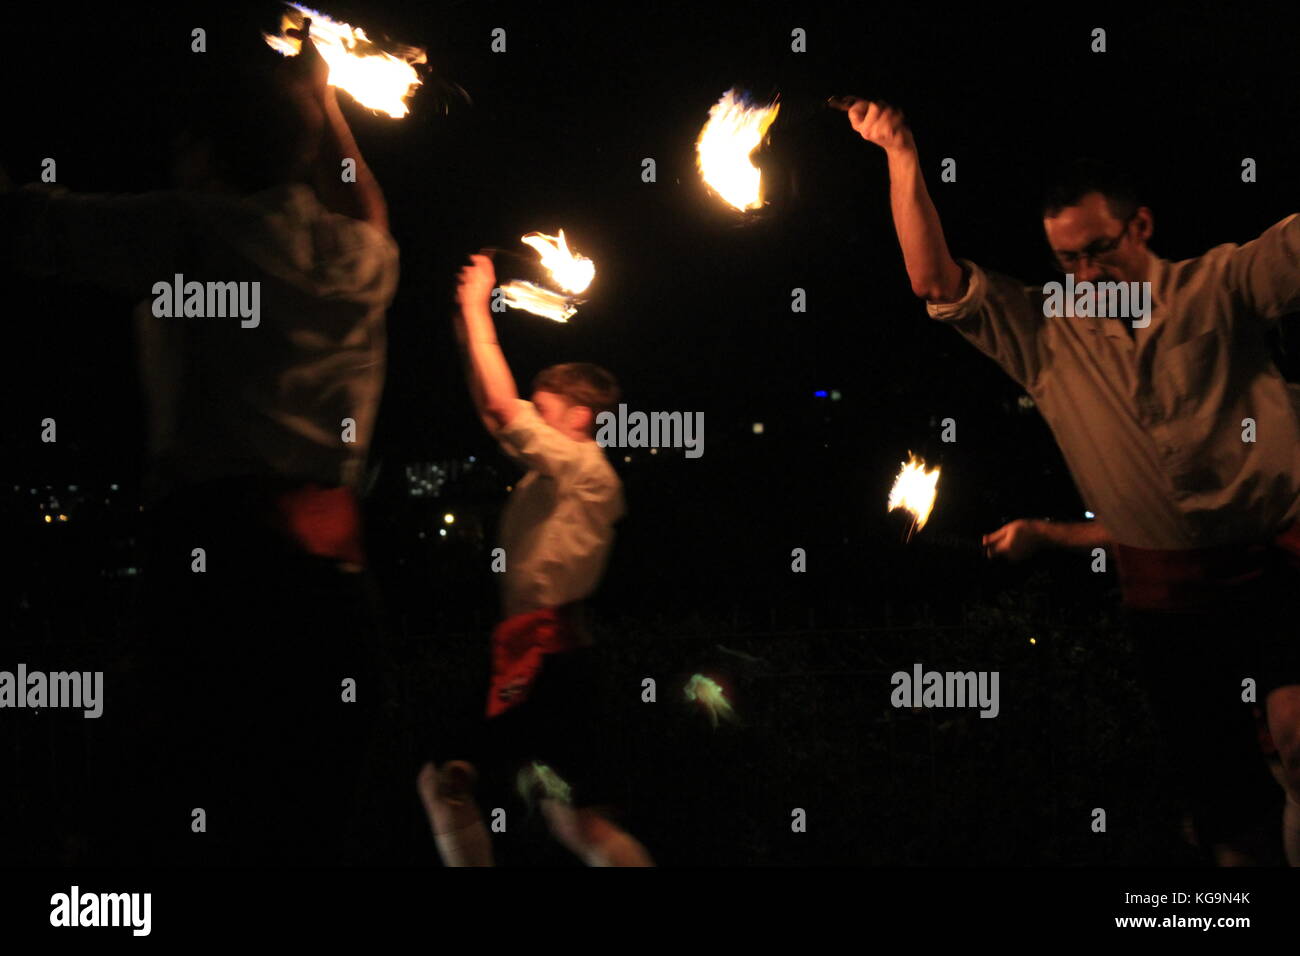 Lagerfeuer Nacht Wochenende feiern: kingsman Fire Dance traditonal Guy Fawkes am Cumberland Arms Pub & Feuerwerk aus ouseburn Stadion. Newcastle upon Tyne, 5. November. davidwhinham/alamylive Stockfoto